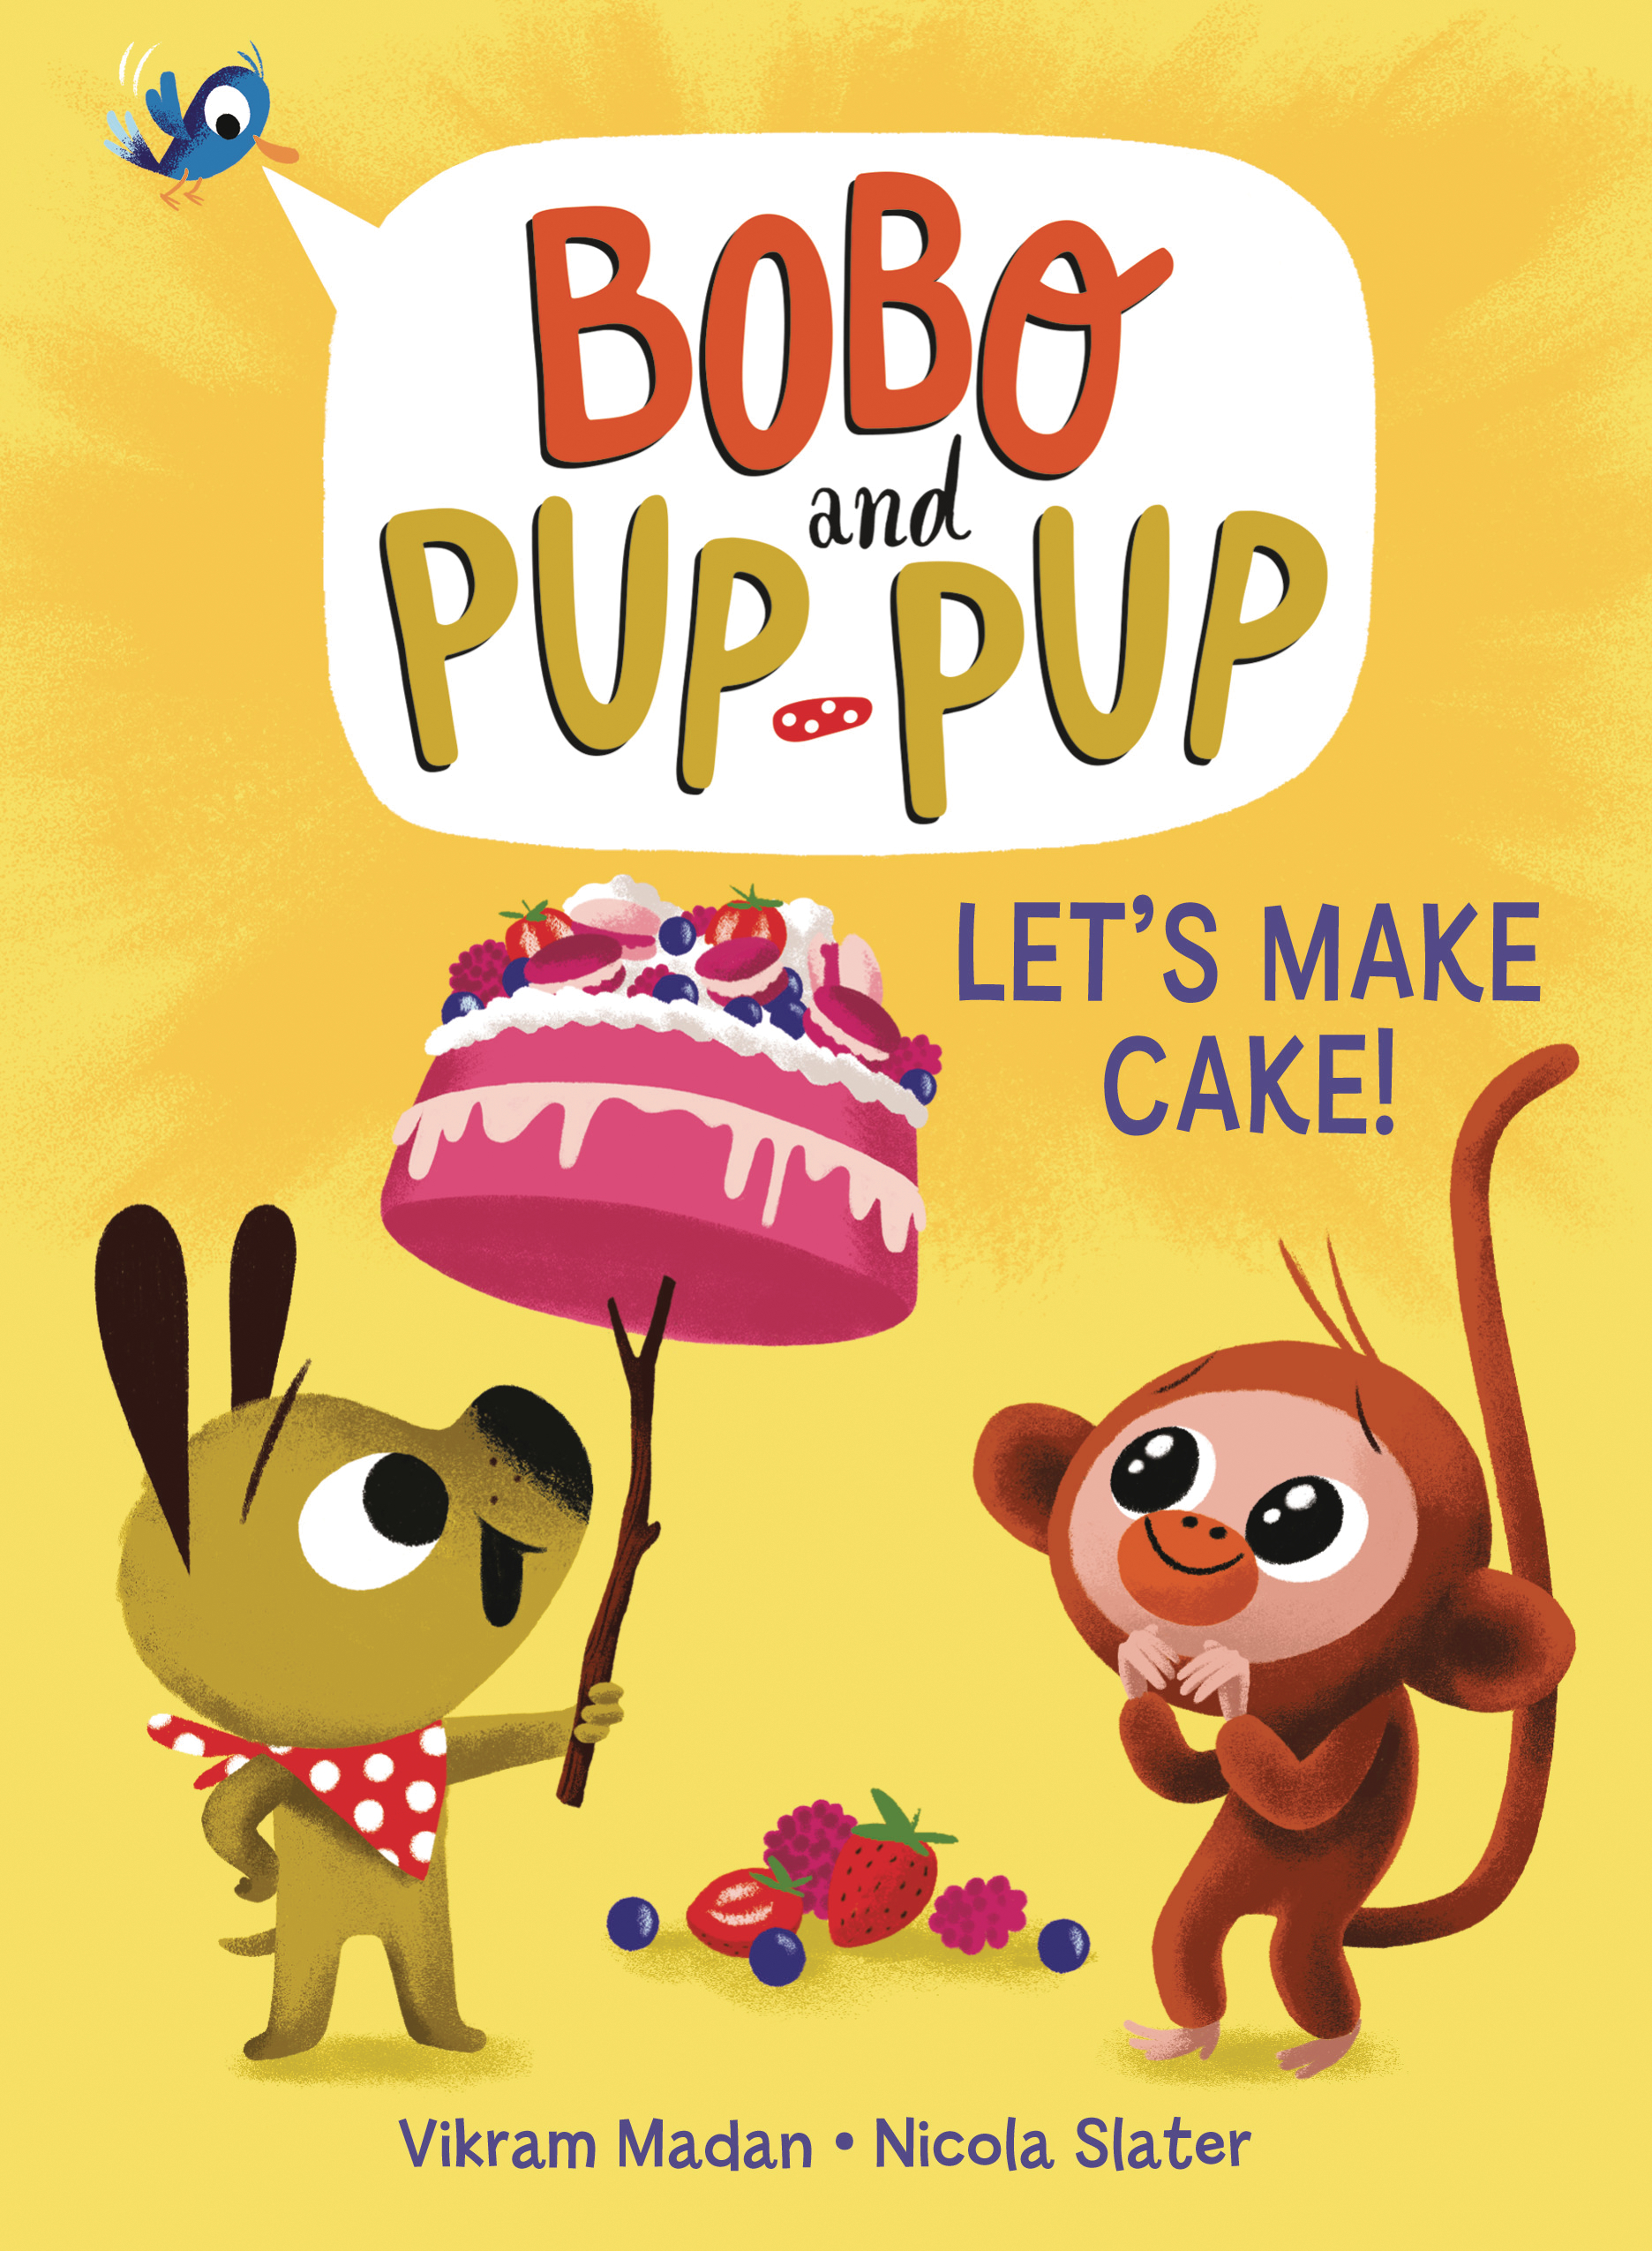 Bobo And Pup-Pup Young Reader Graphic Novel #2 Lets Make Cake